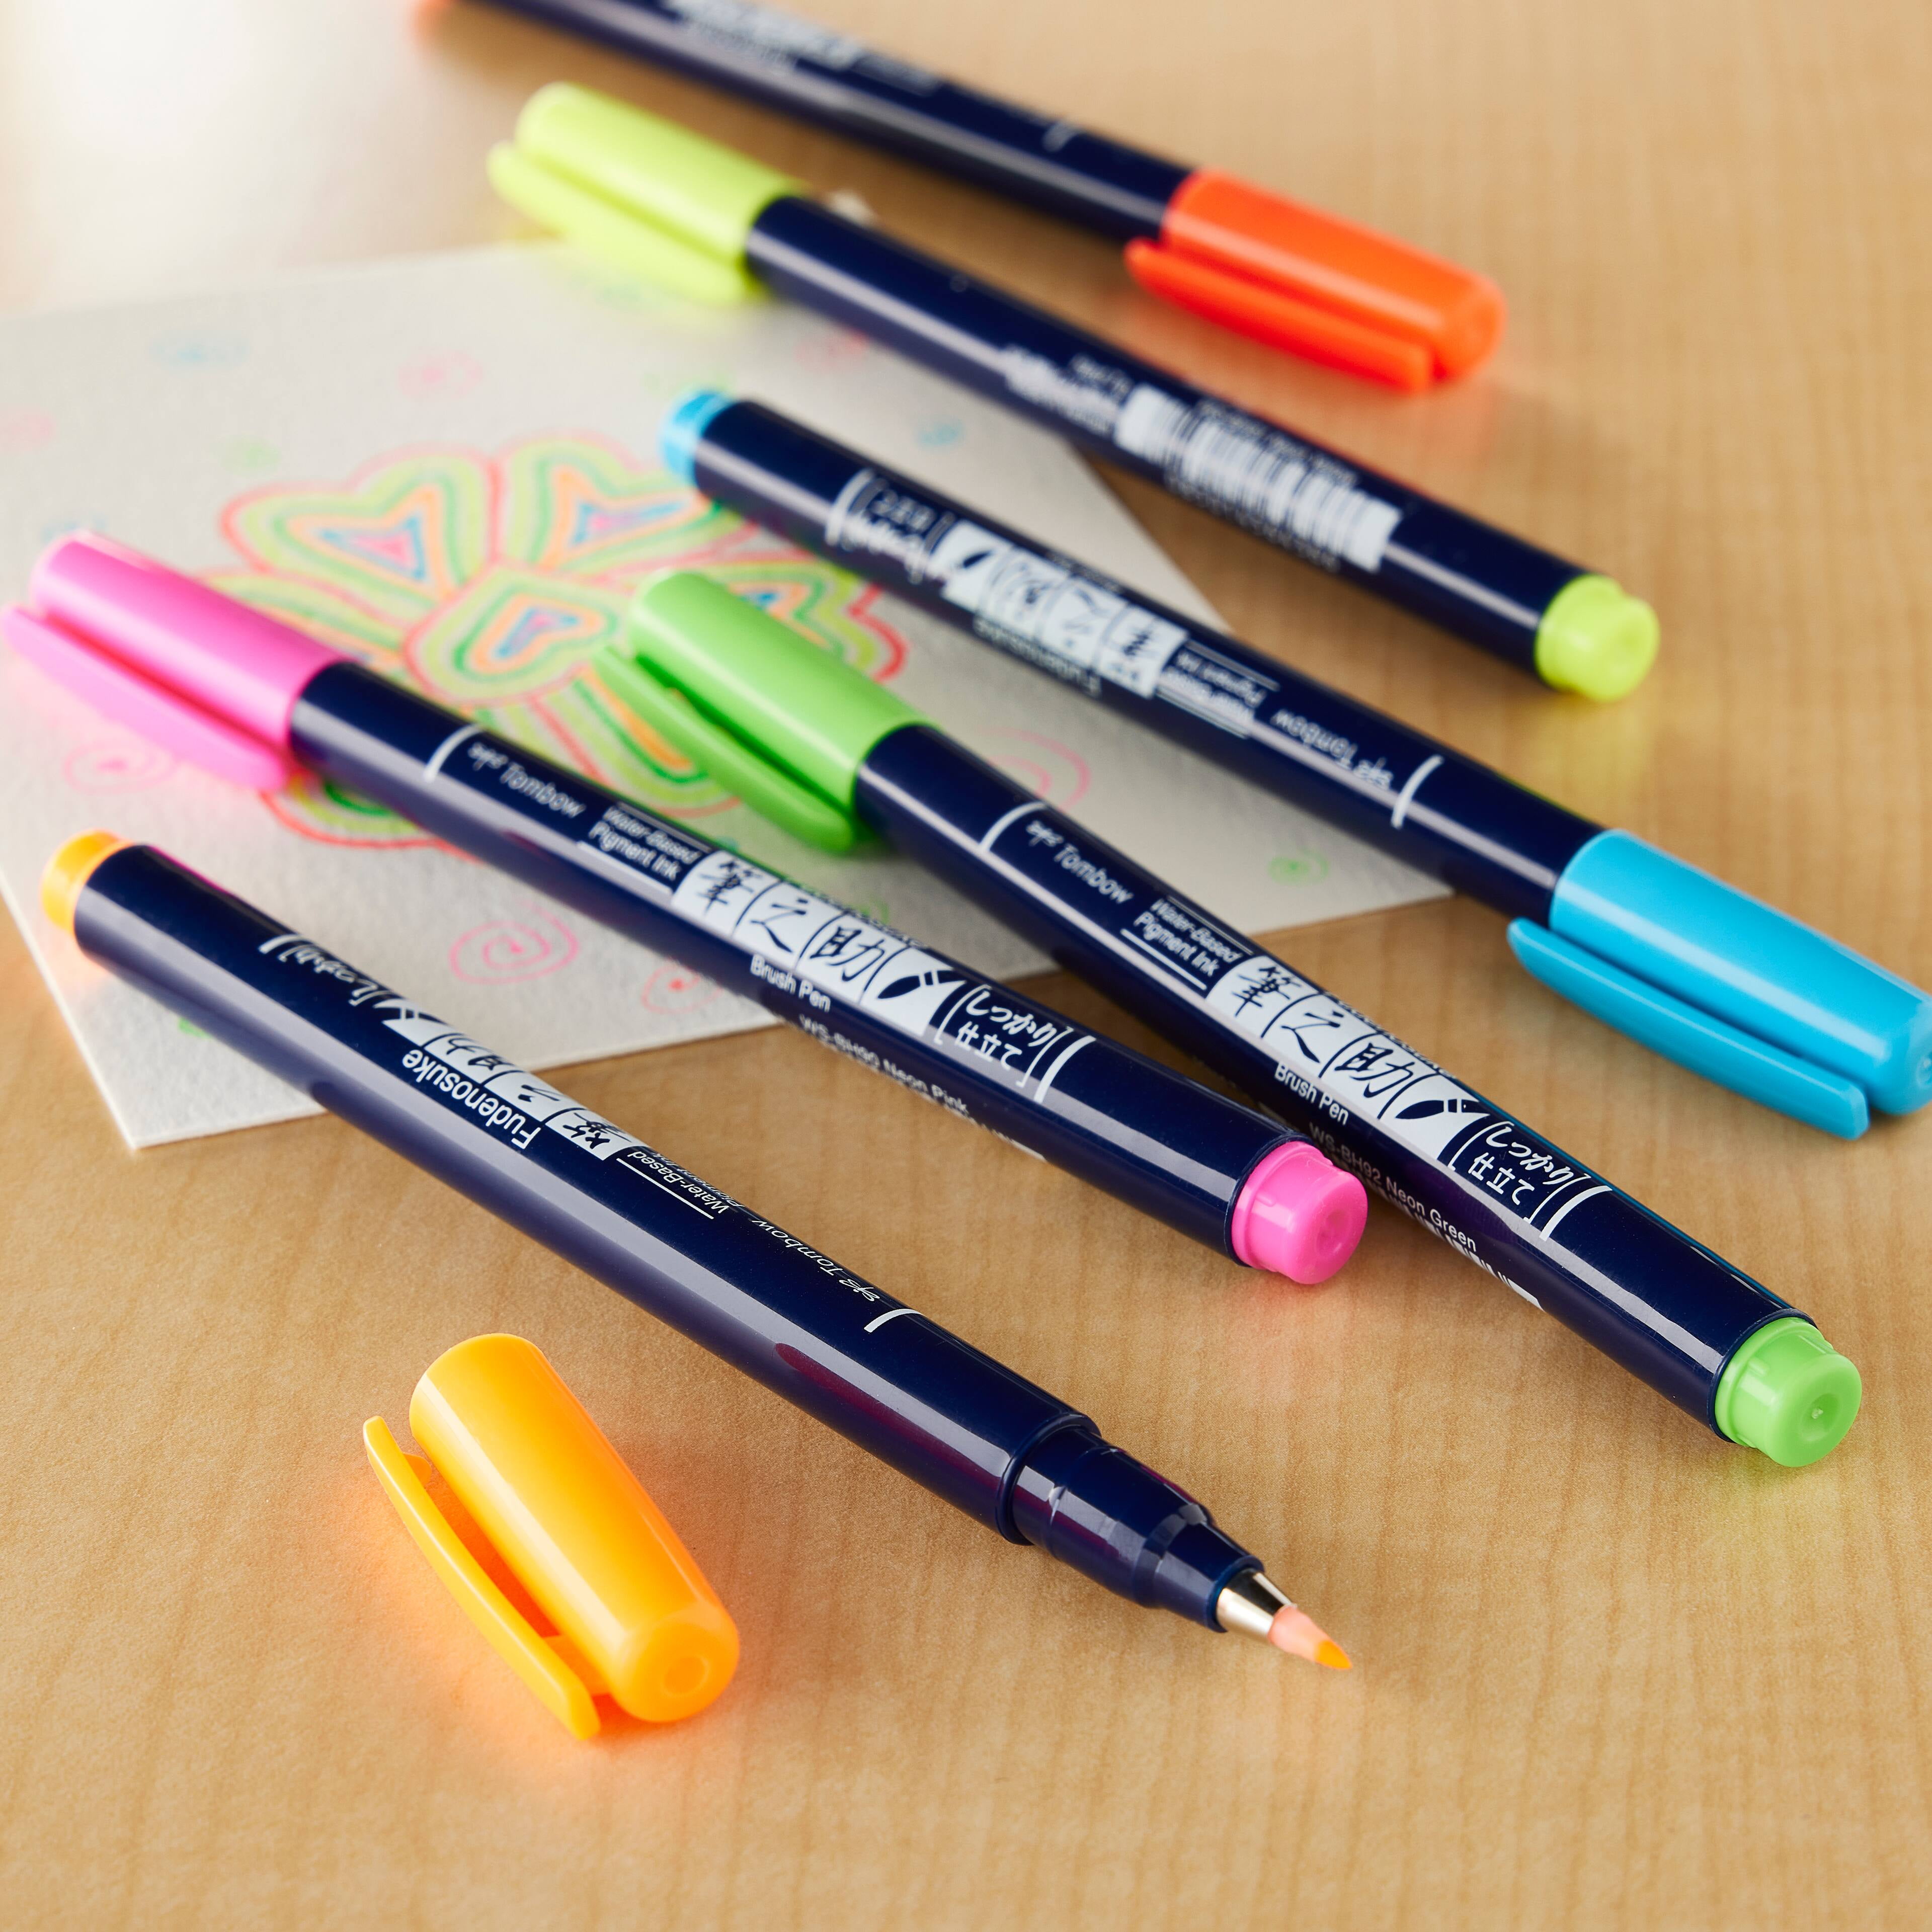 Fudenosuke Brush Color Markers 6 Color Set / Tombow – bungu